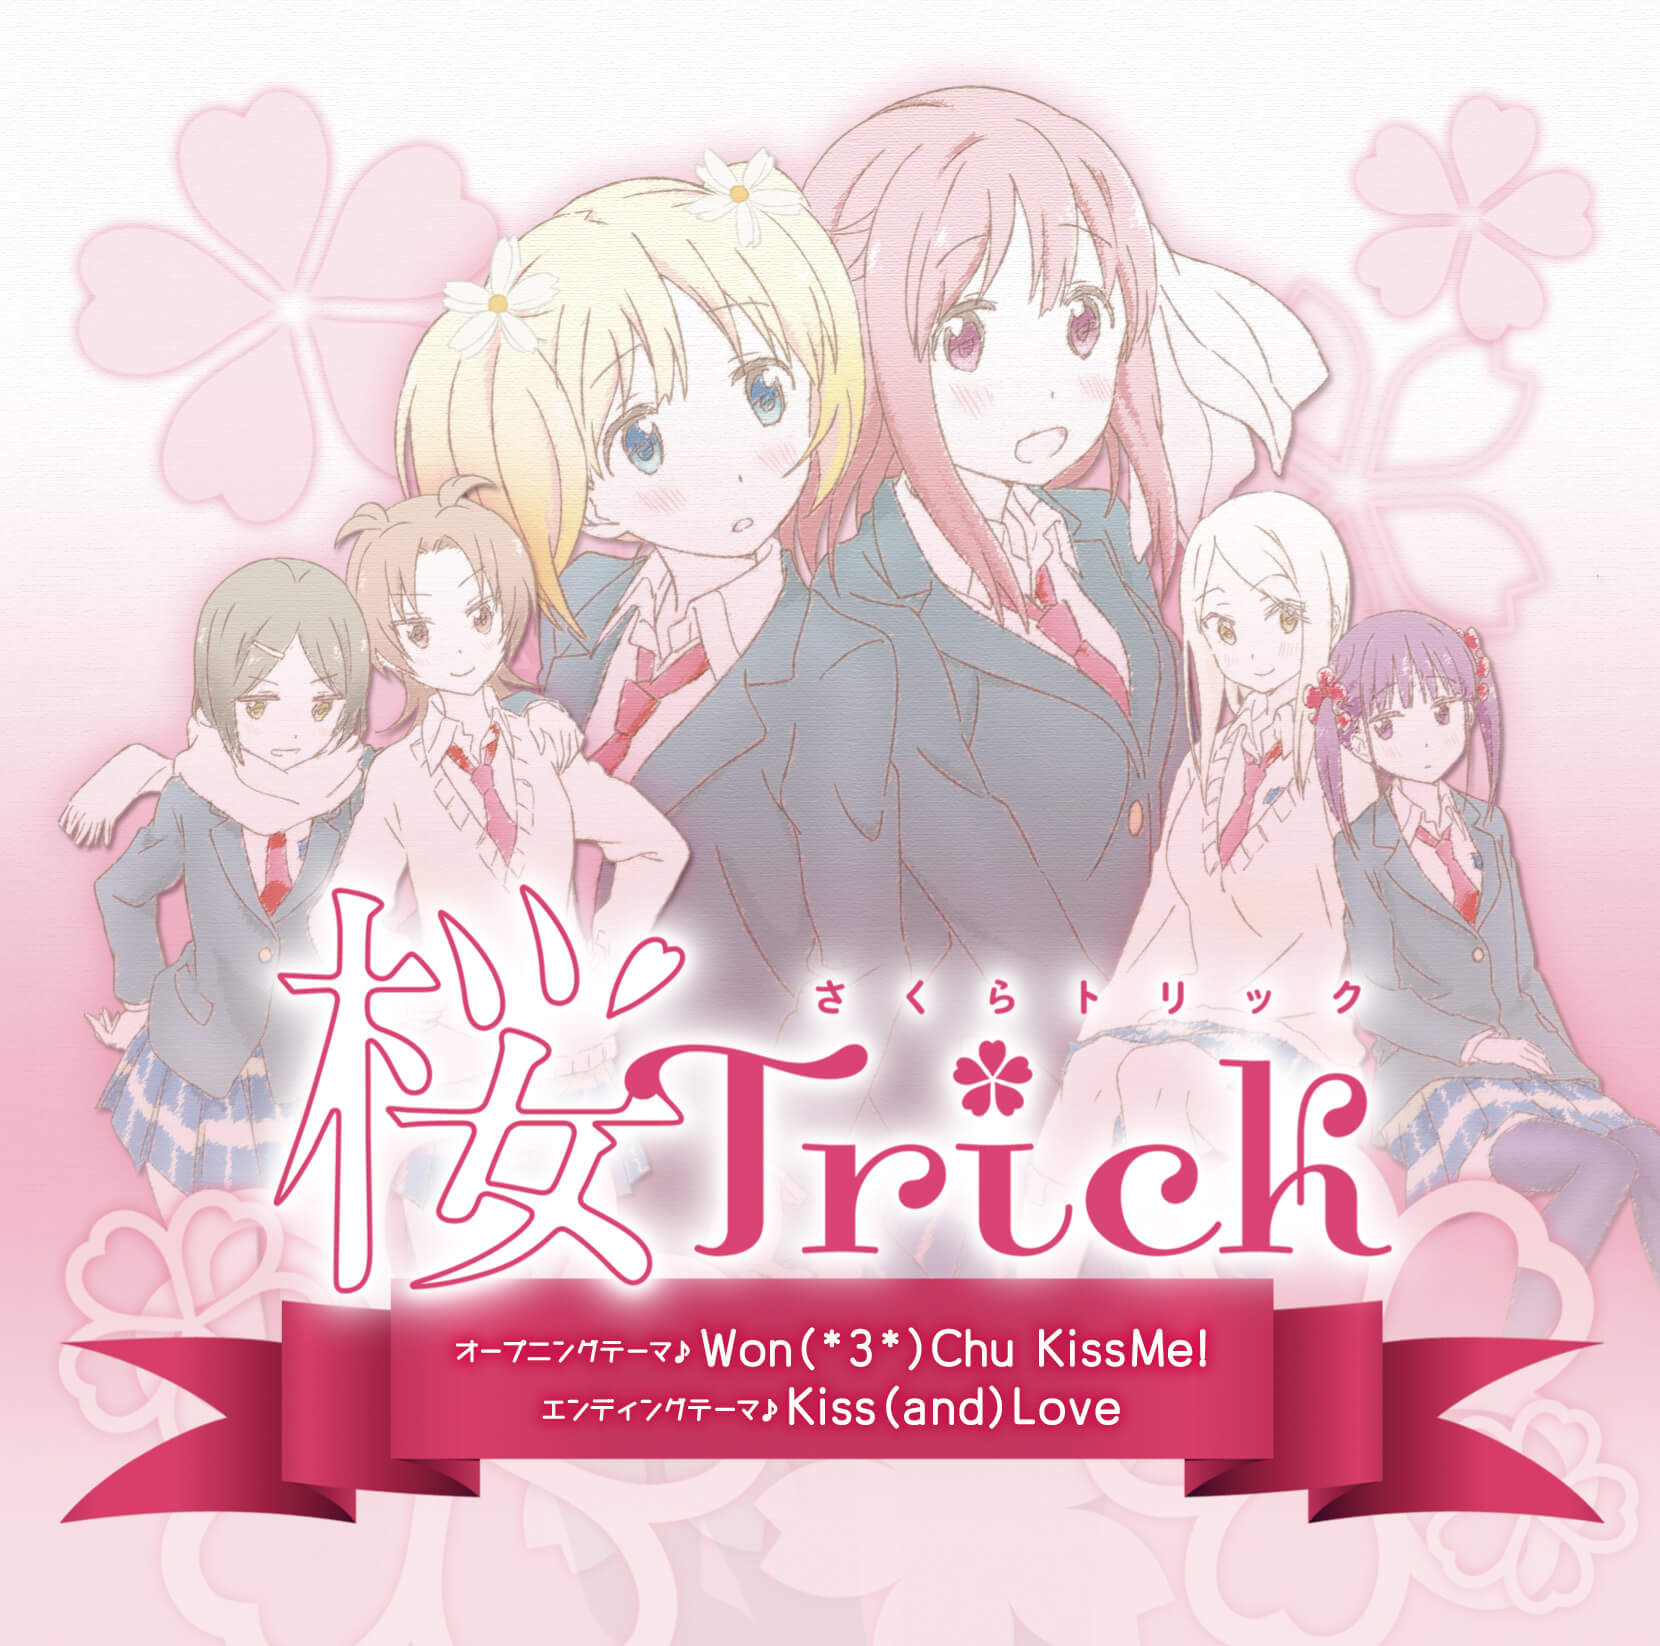 %e6%a1%9ctrick-sakura-trick-anime-download-2